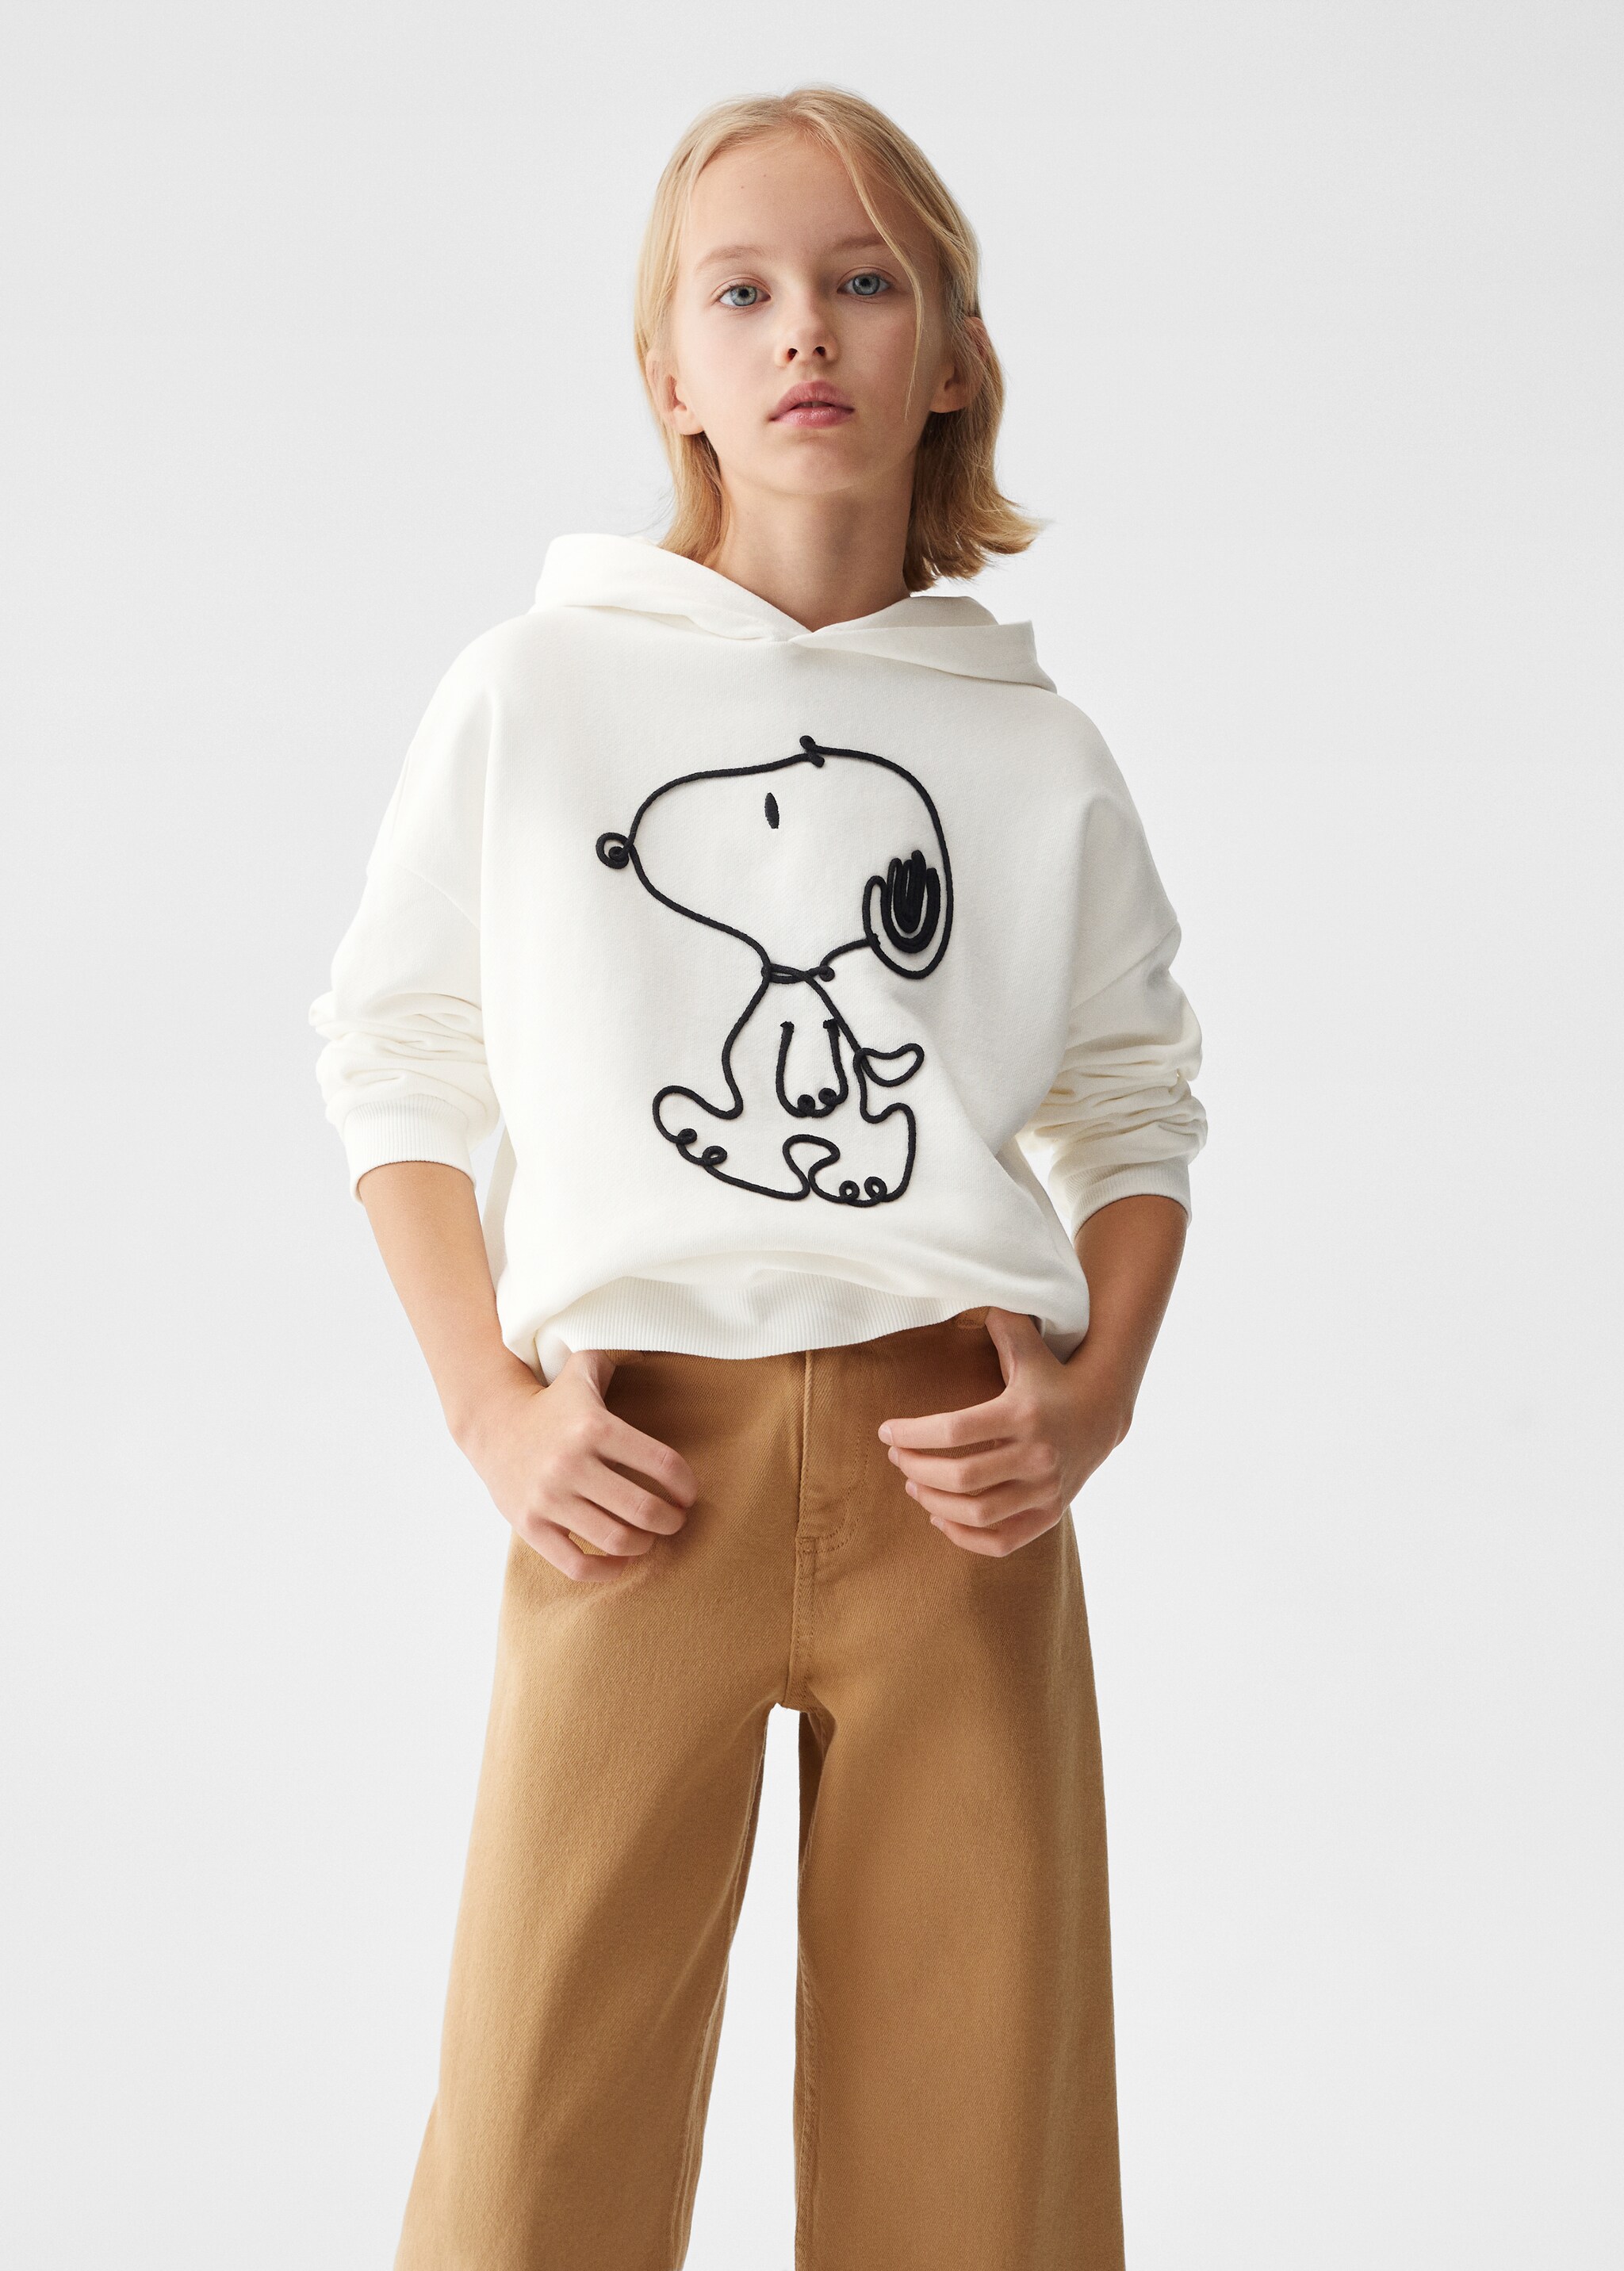 Hooded Snoopy sweatshirt - Medium plane